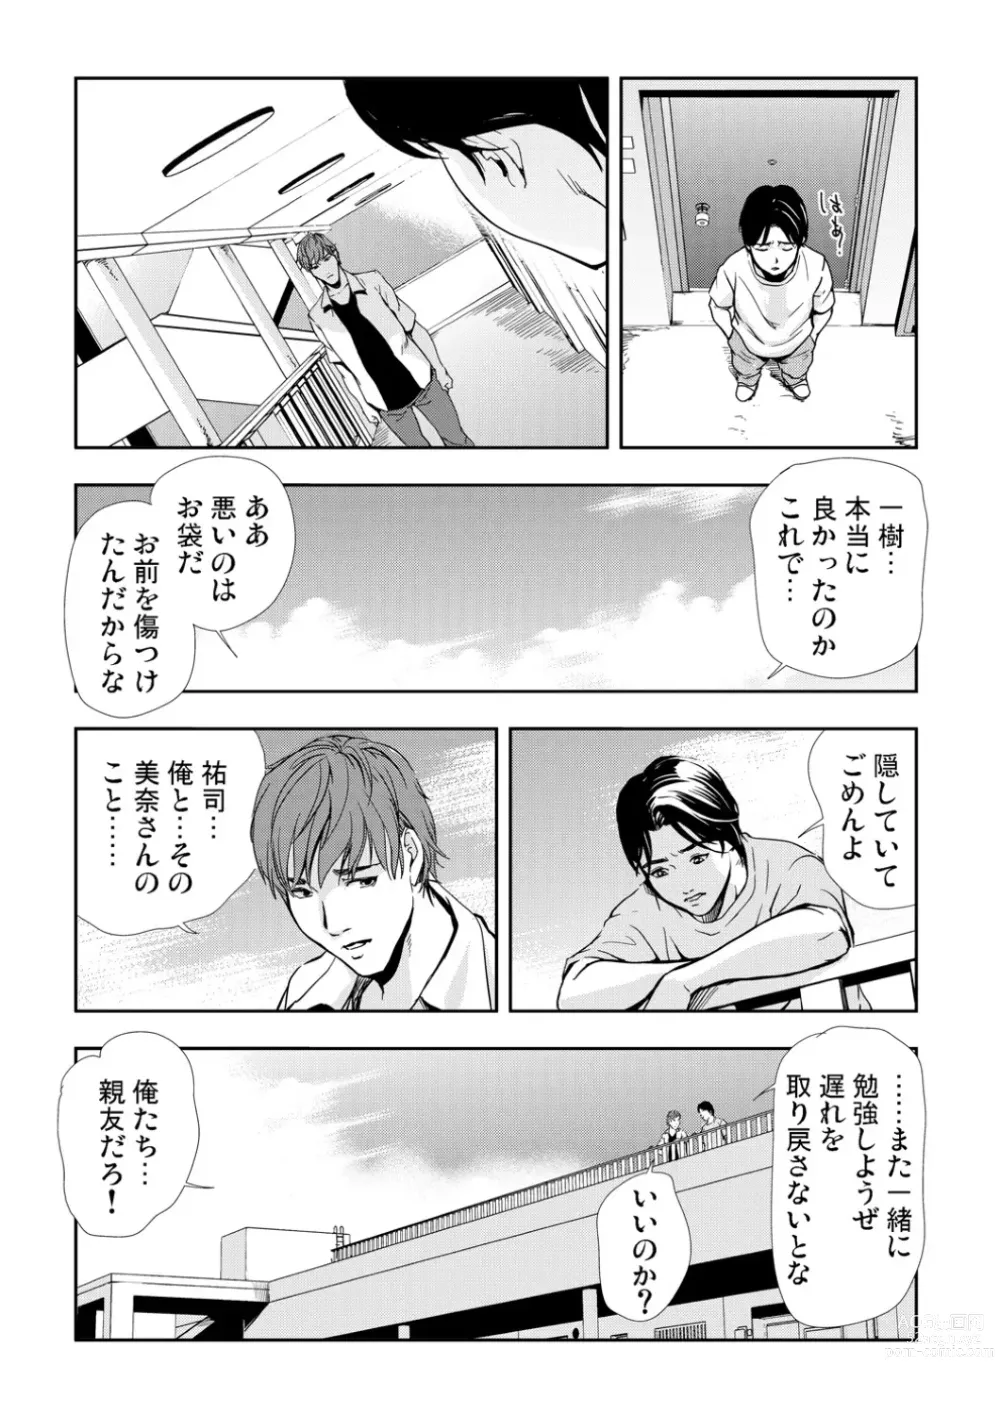 Page 25 of manga Netorare Vol.10